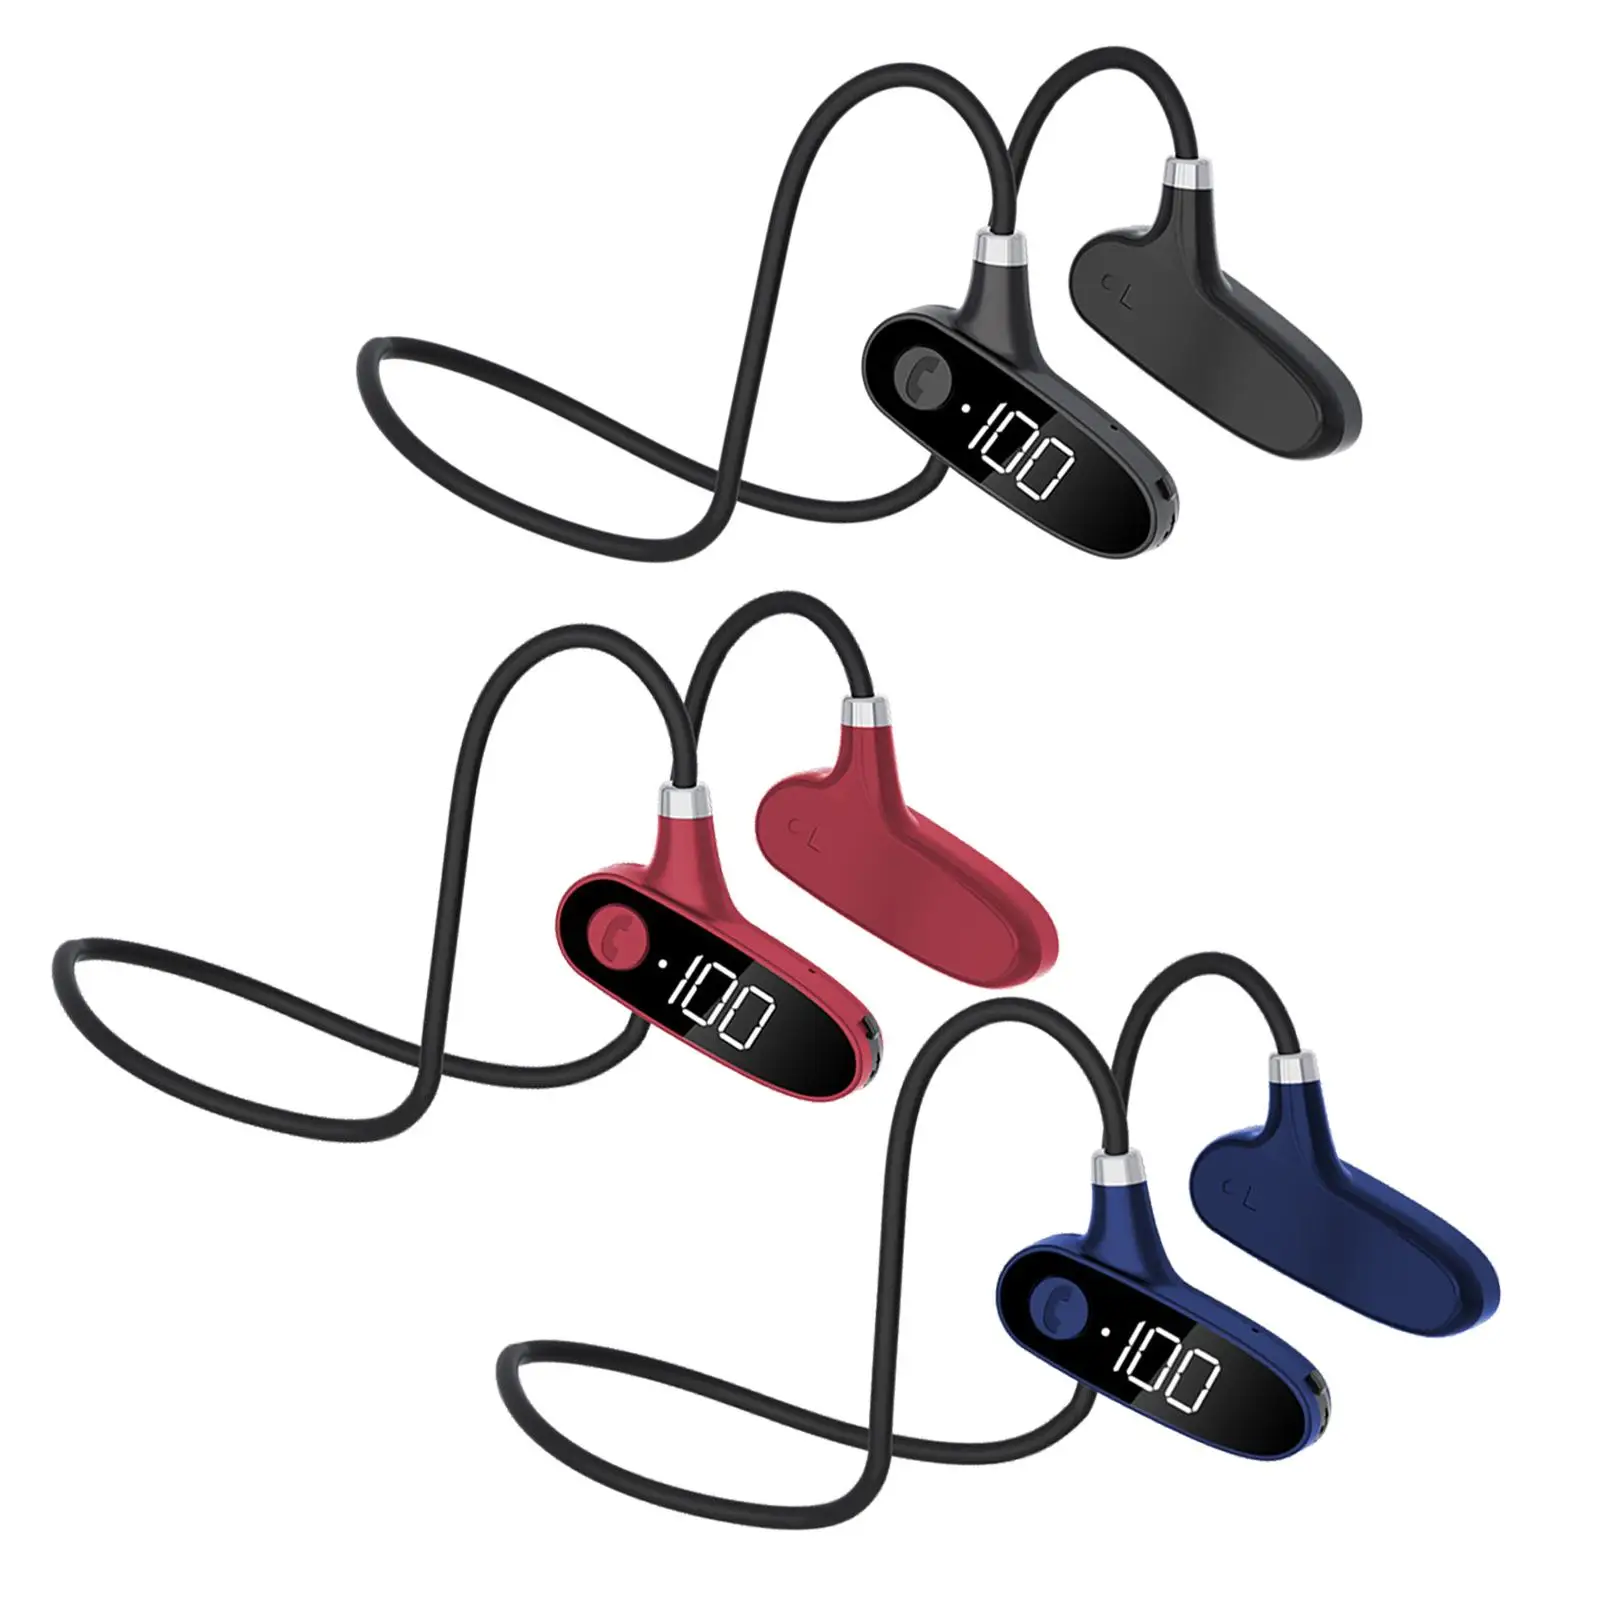 Sport Bone Conduction Headphones Earphones Open-Ear Bluetooth , Built in Microphone